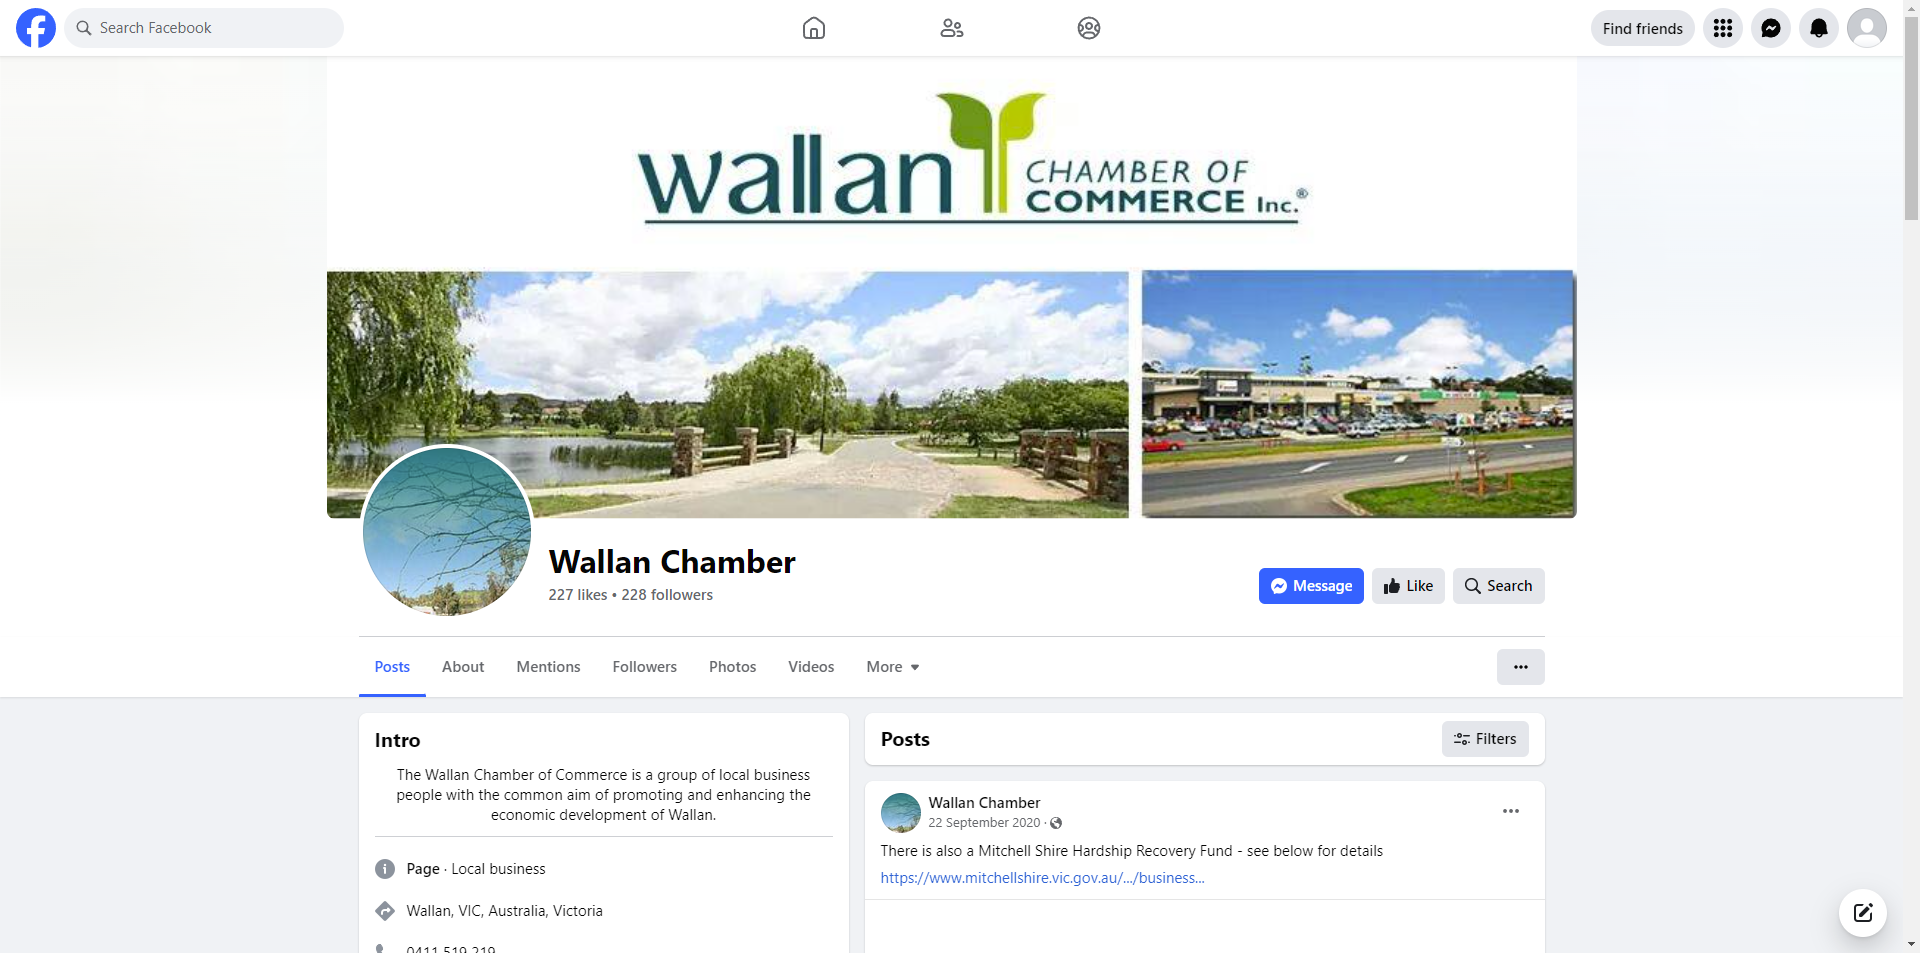 Wallam Chamber of Commerce